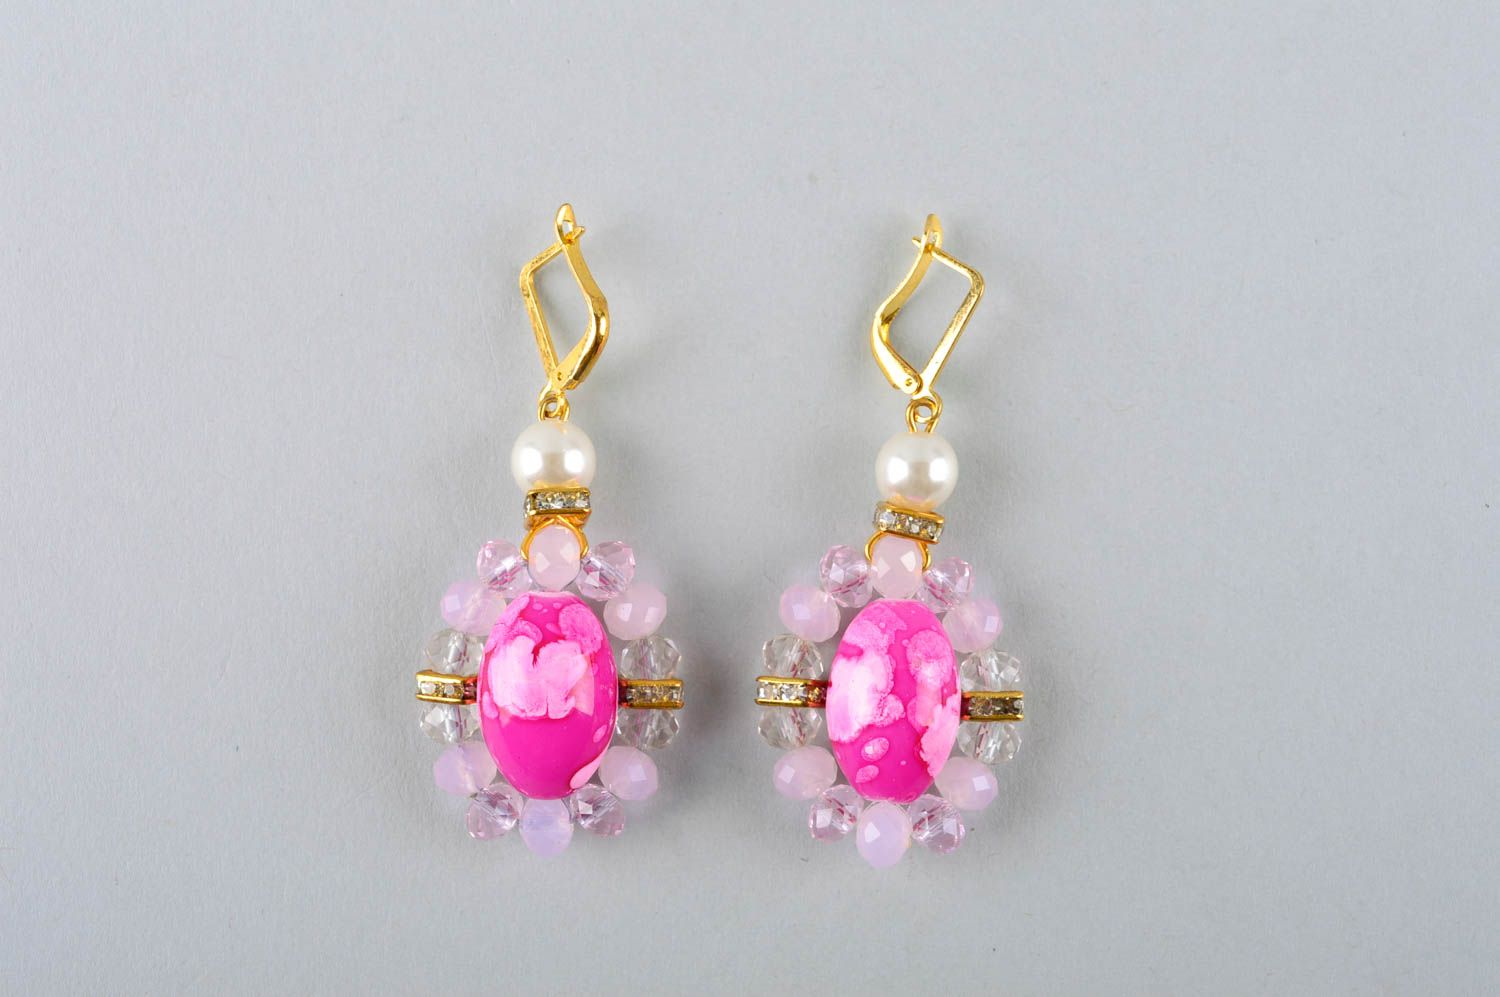 Homemade jewelry earrings for ladies cute earrings designer accessories photo 2